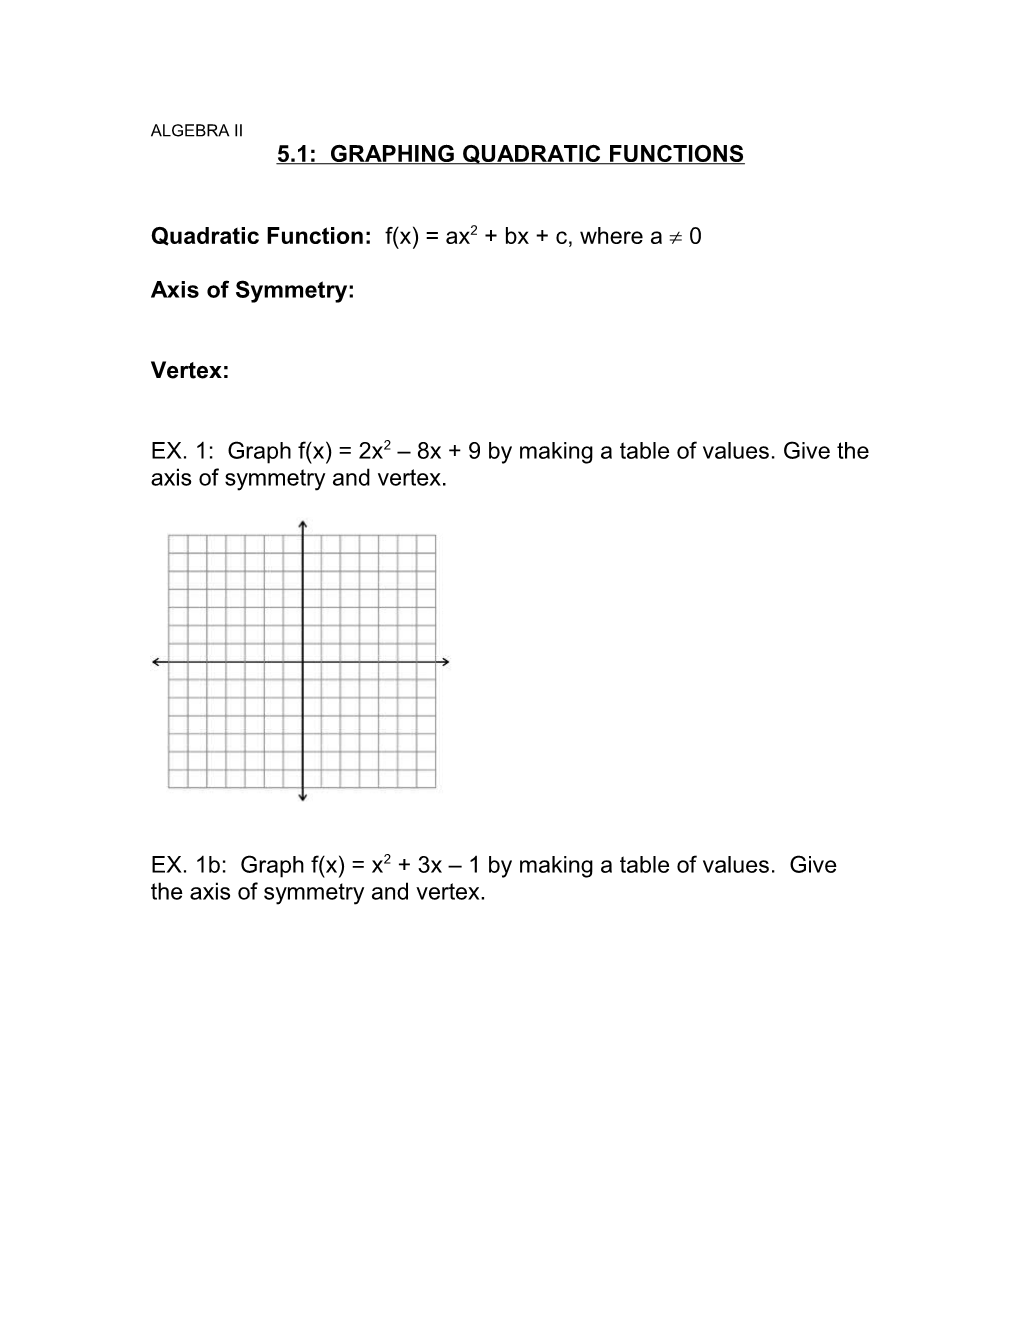 5.1: Graphing Quadratic Functions